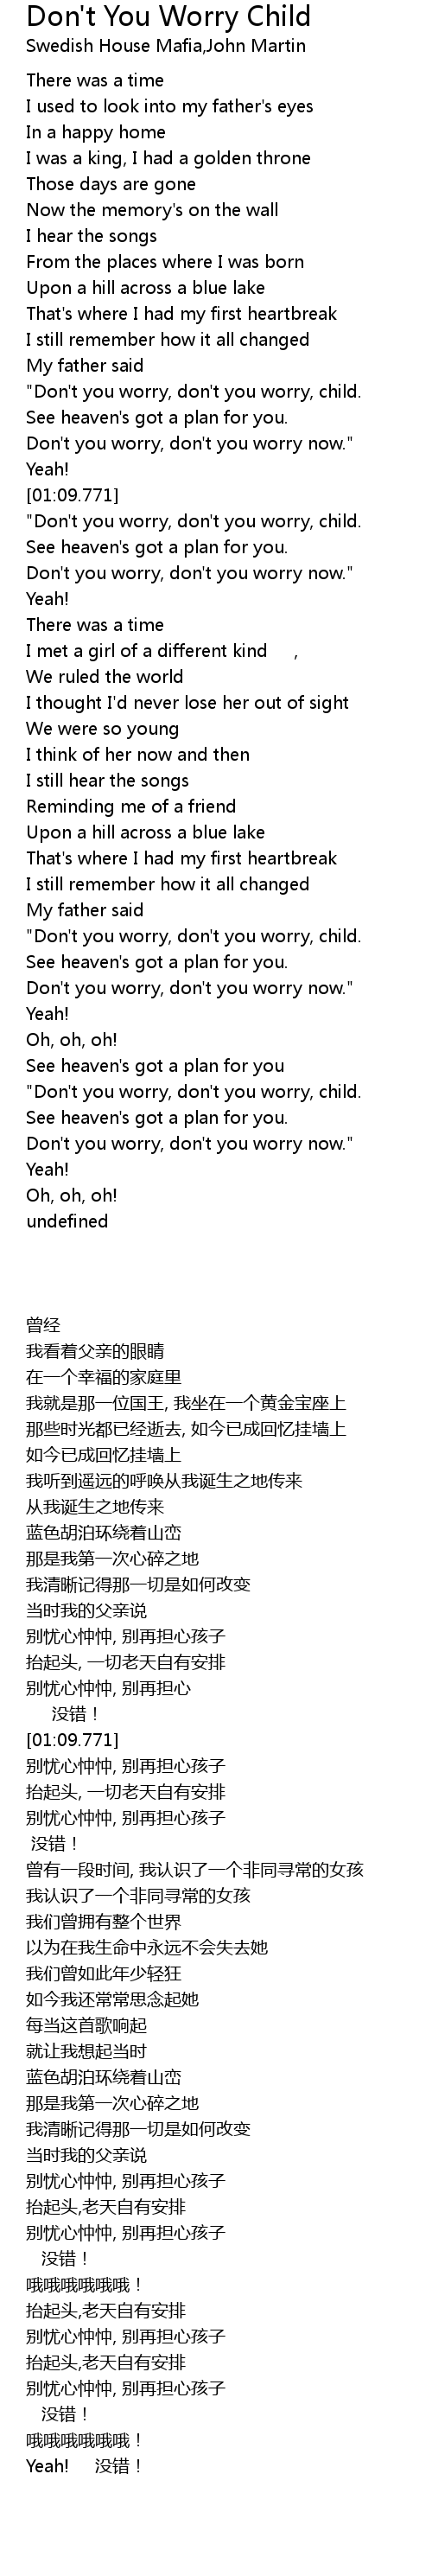 Don T You Worry Child Lyrics Follow Lyrics